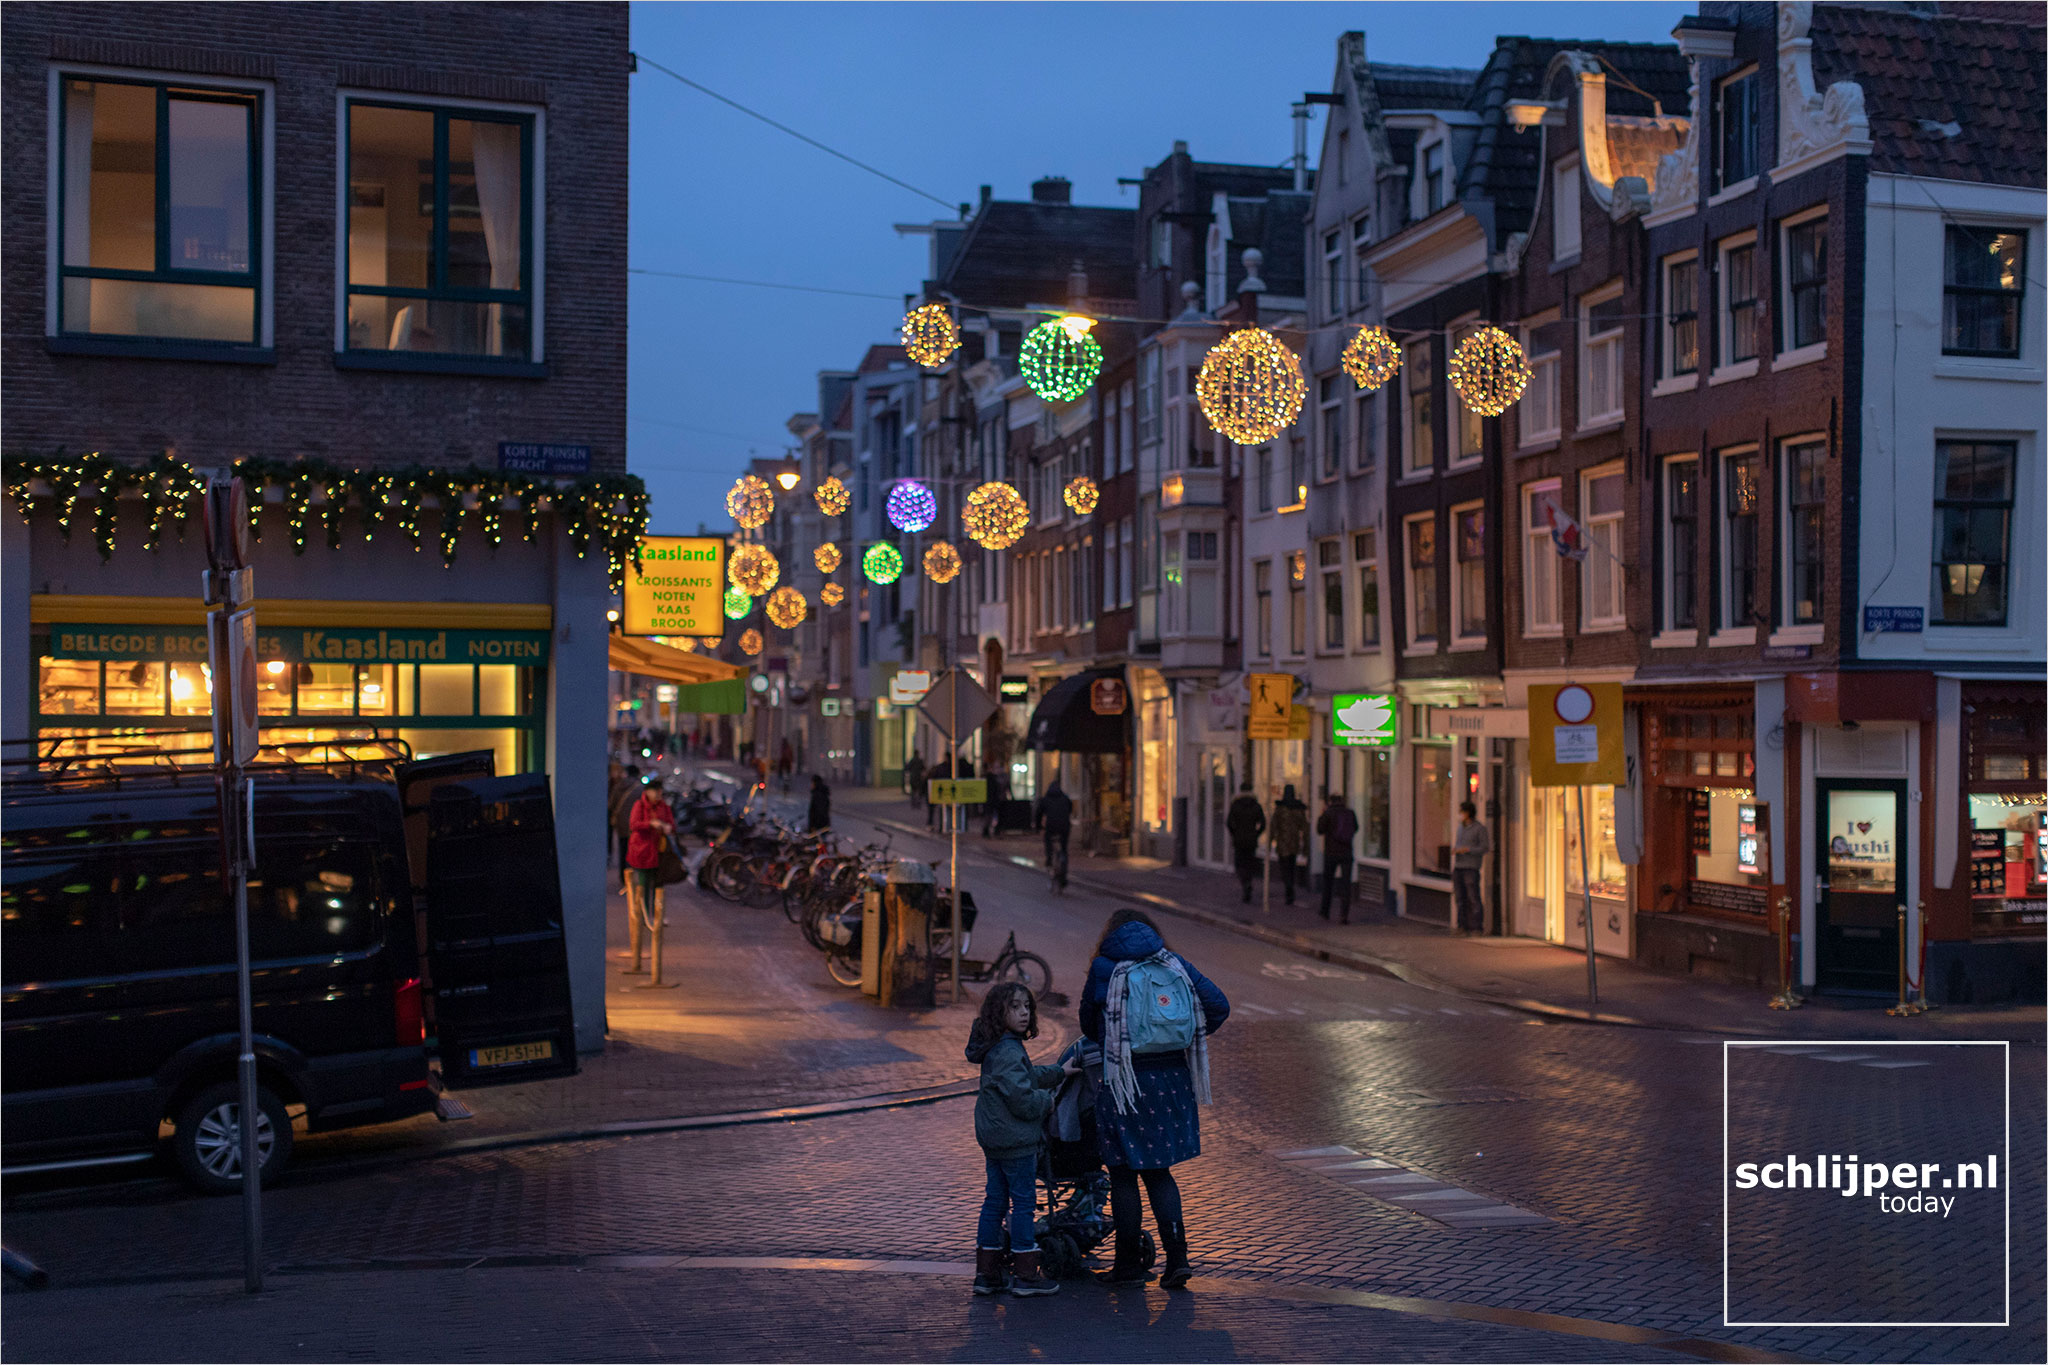 The Netherlands, Amsterdam, 27 januari 2021